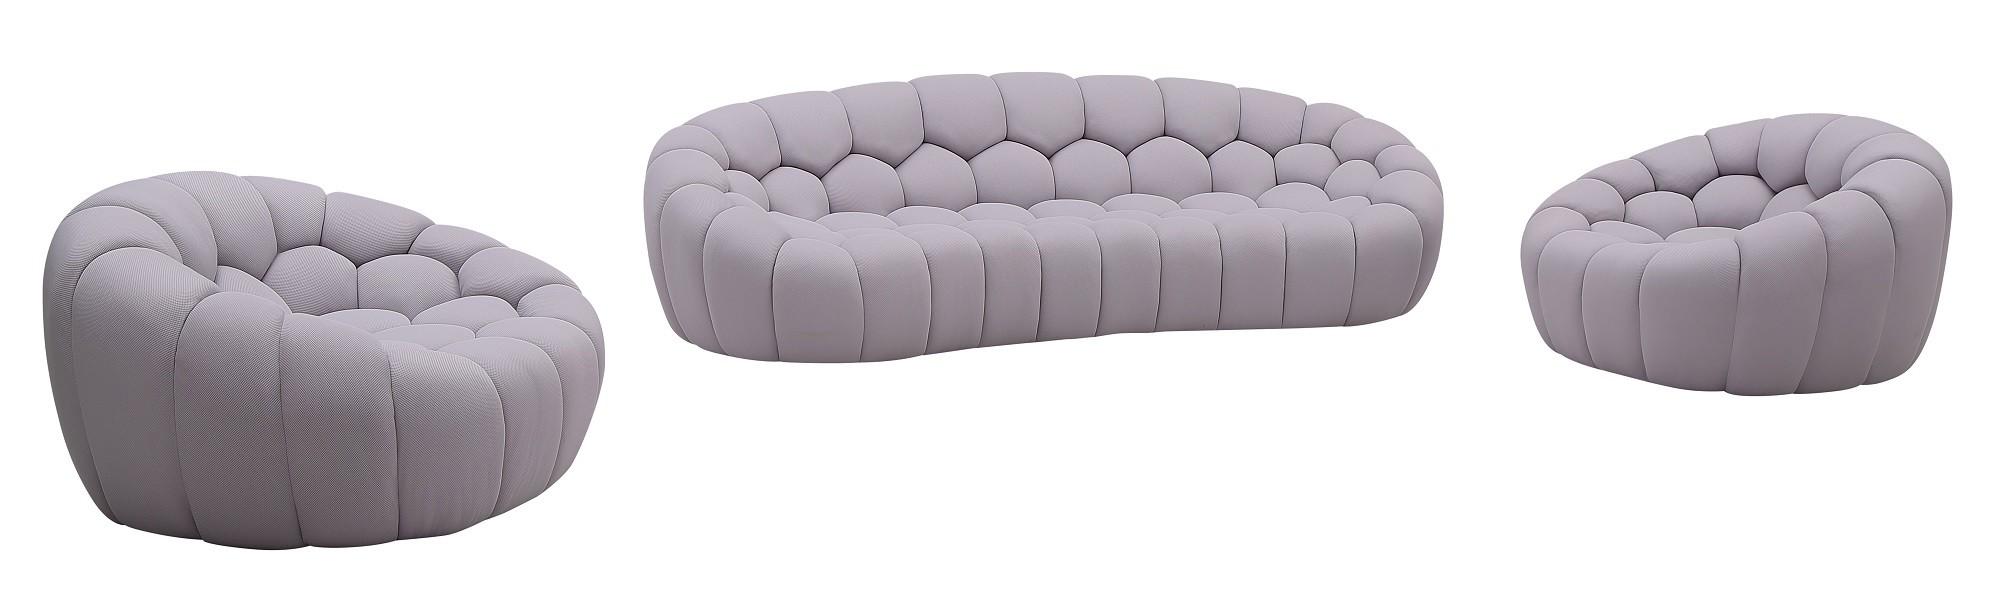 Contemporary Sofa Set Fantasy SKU 18442-GR-3PC in Light Gray Fabric